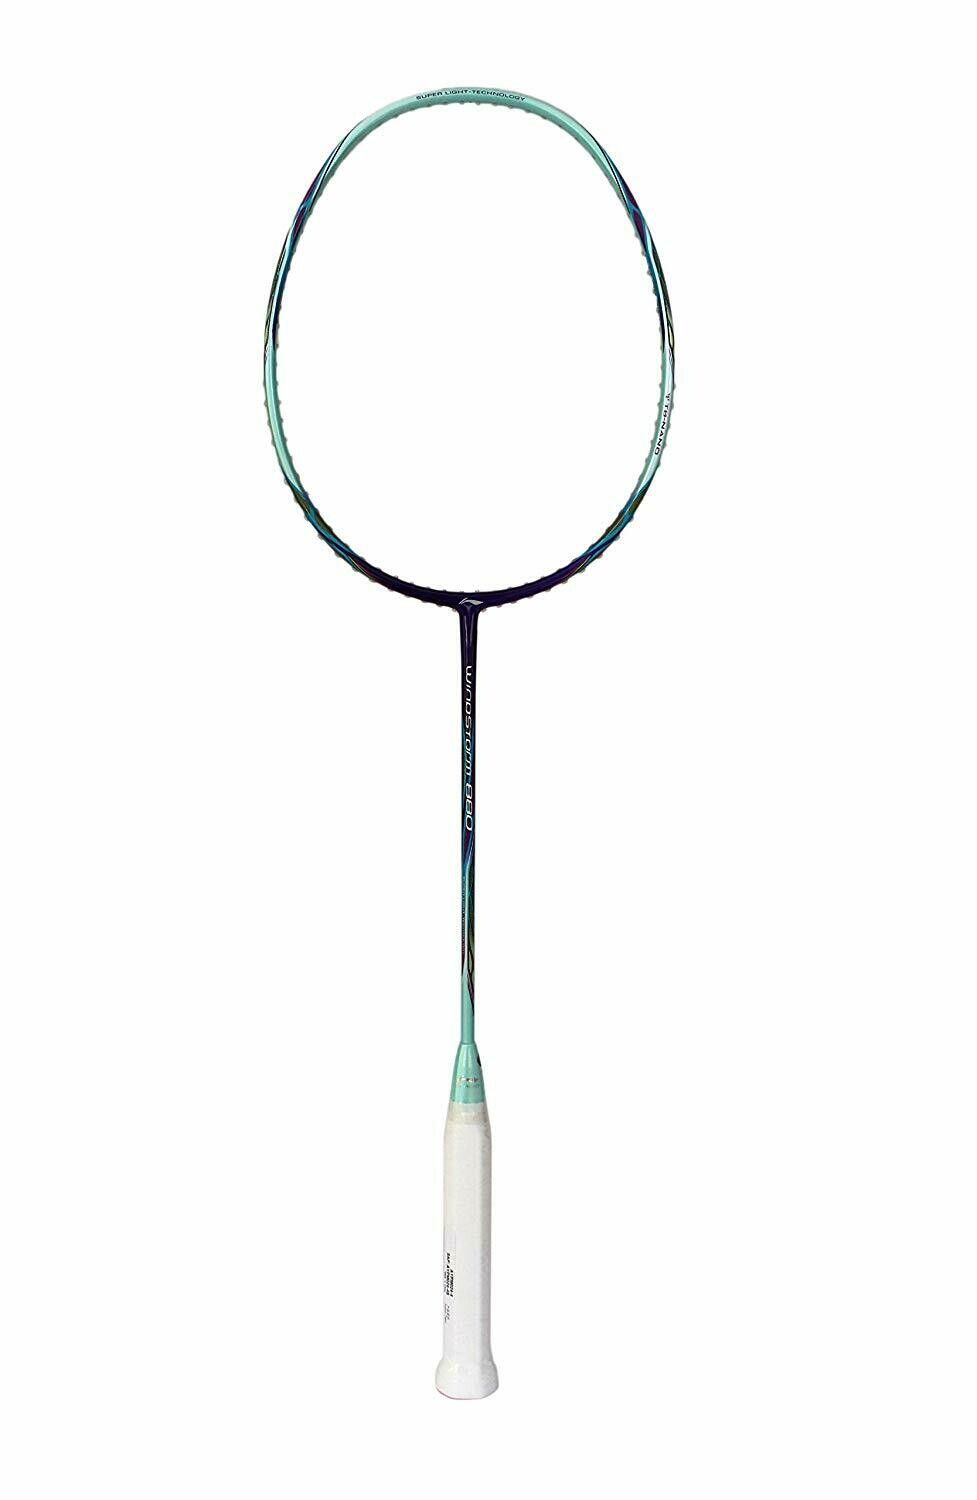 LI-NING Windstorm 880 Super Light Badminton Racquet - Extra Skill Series